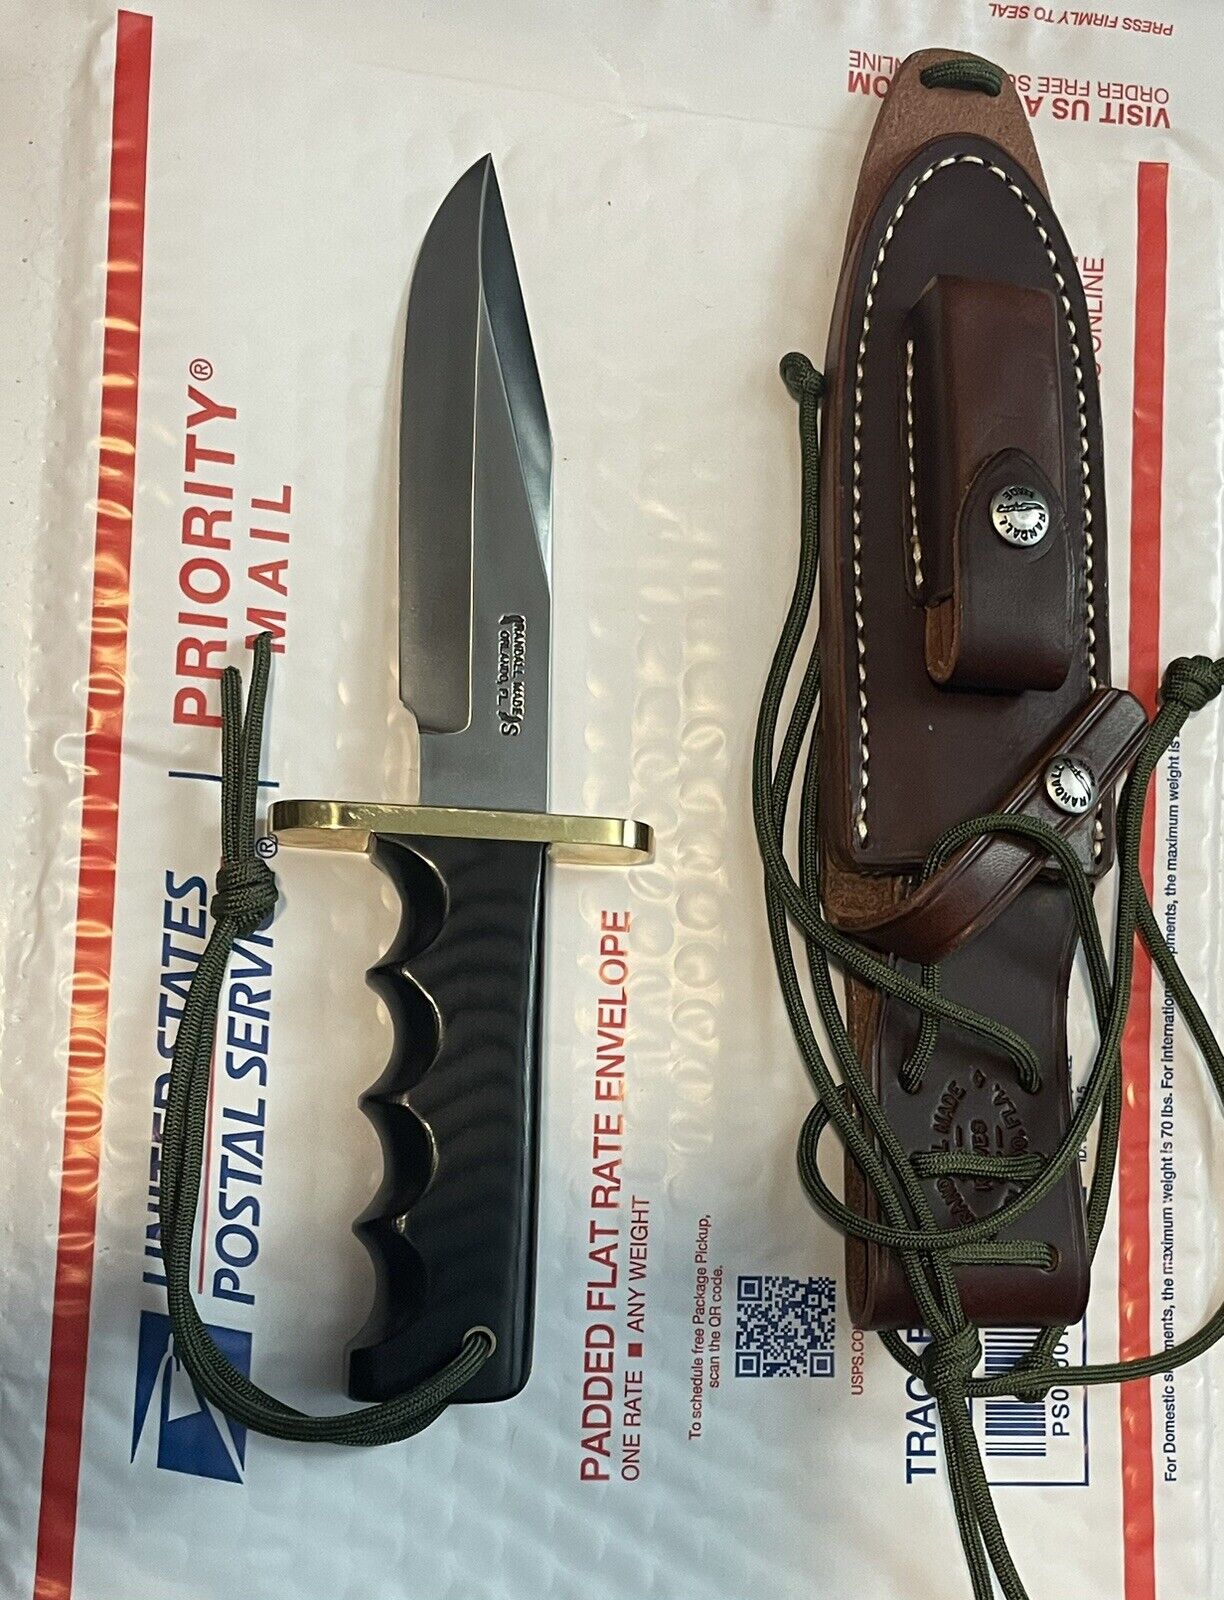 Randall Model 15 Airman knife